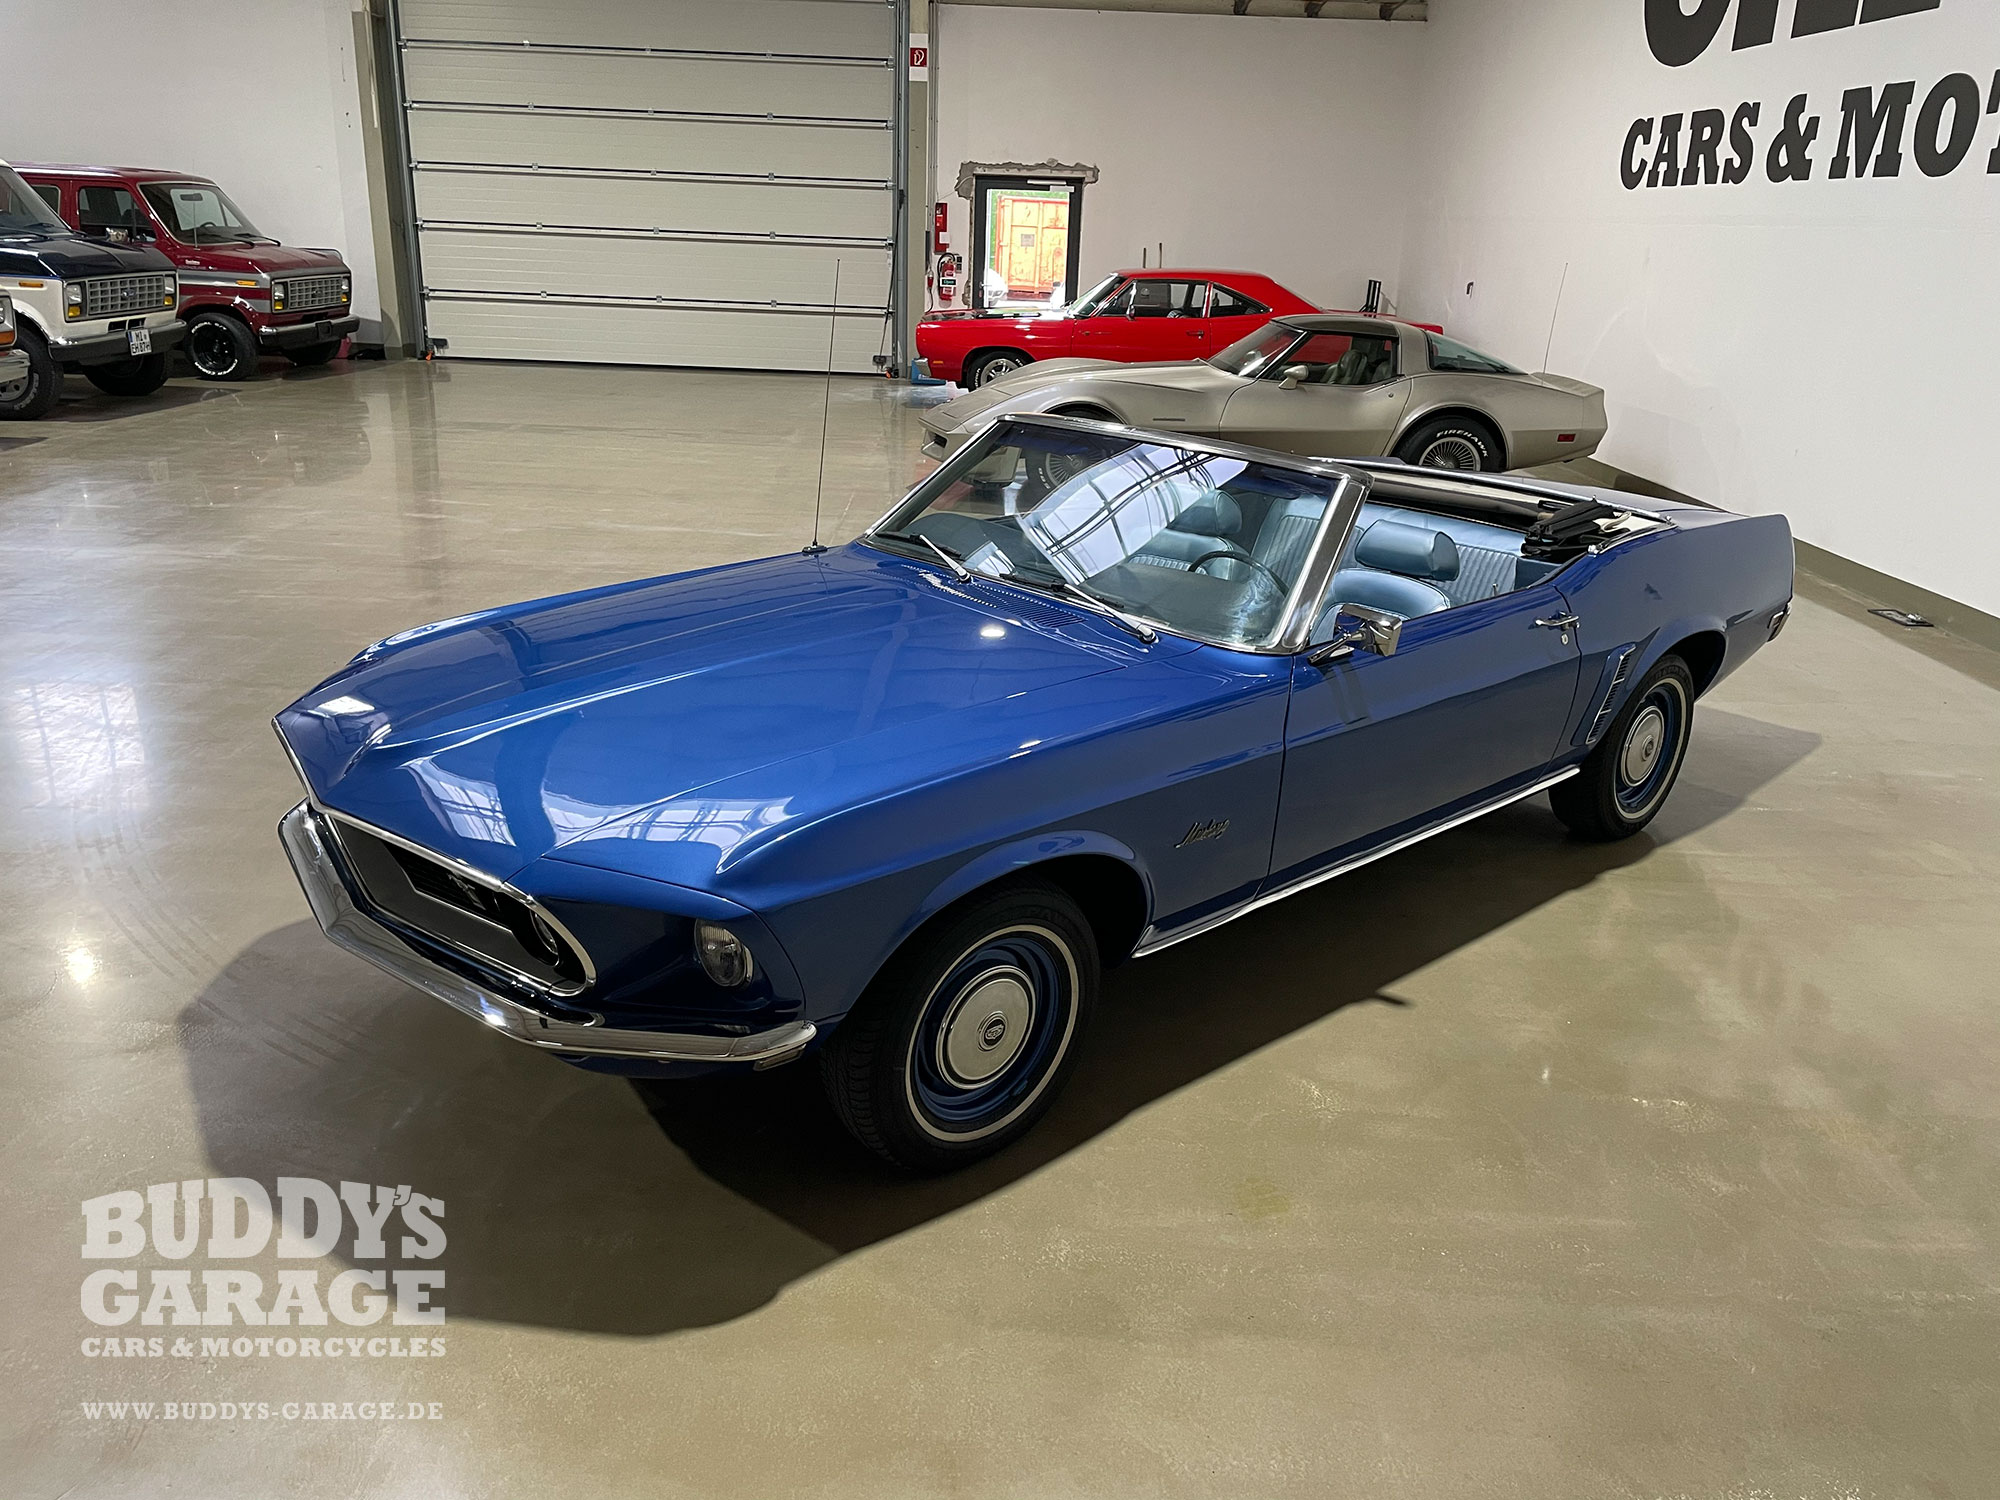 Ford Mustang 1969 blau | Buddy's Garage Bad Oeynhausen